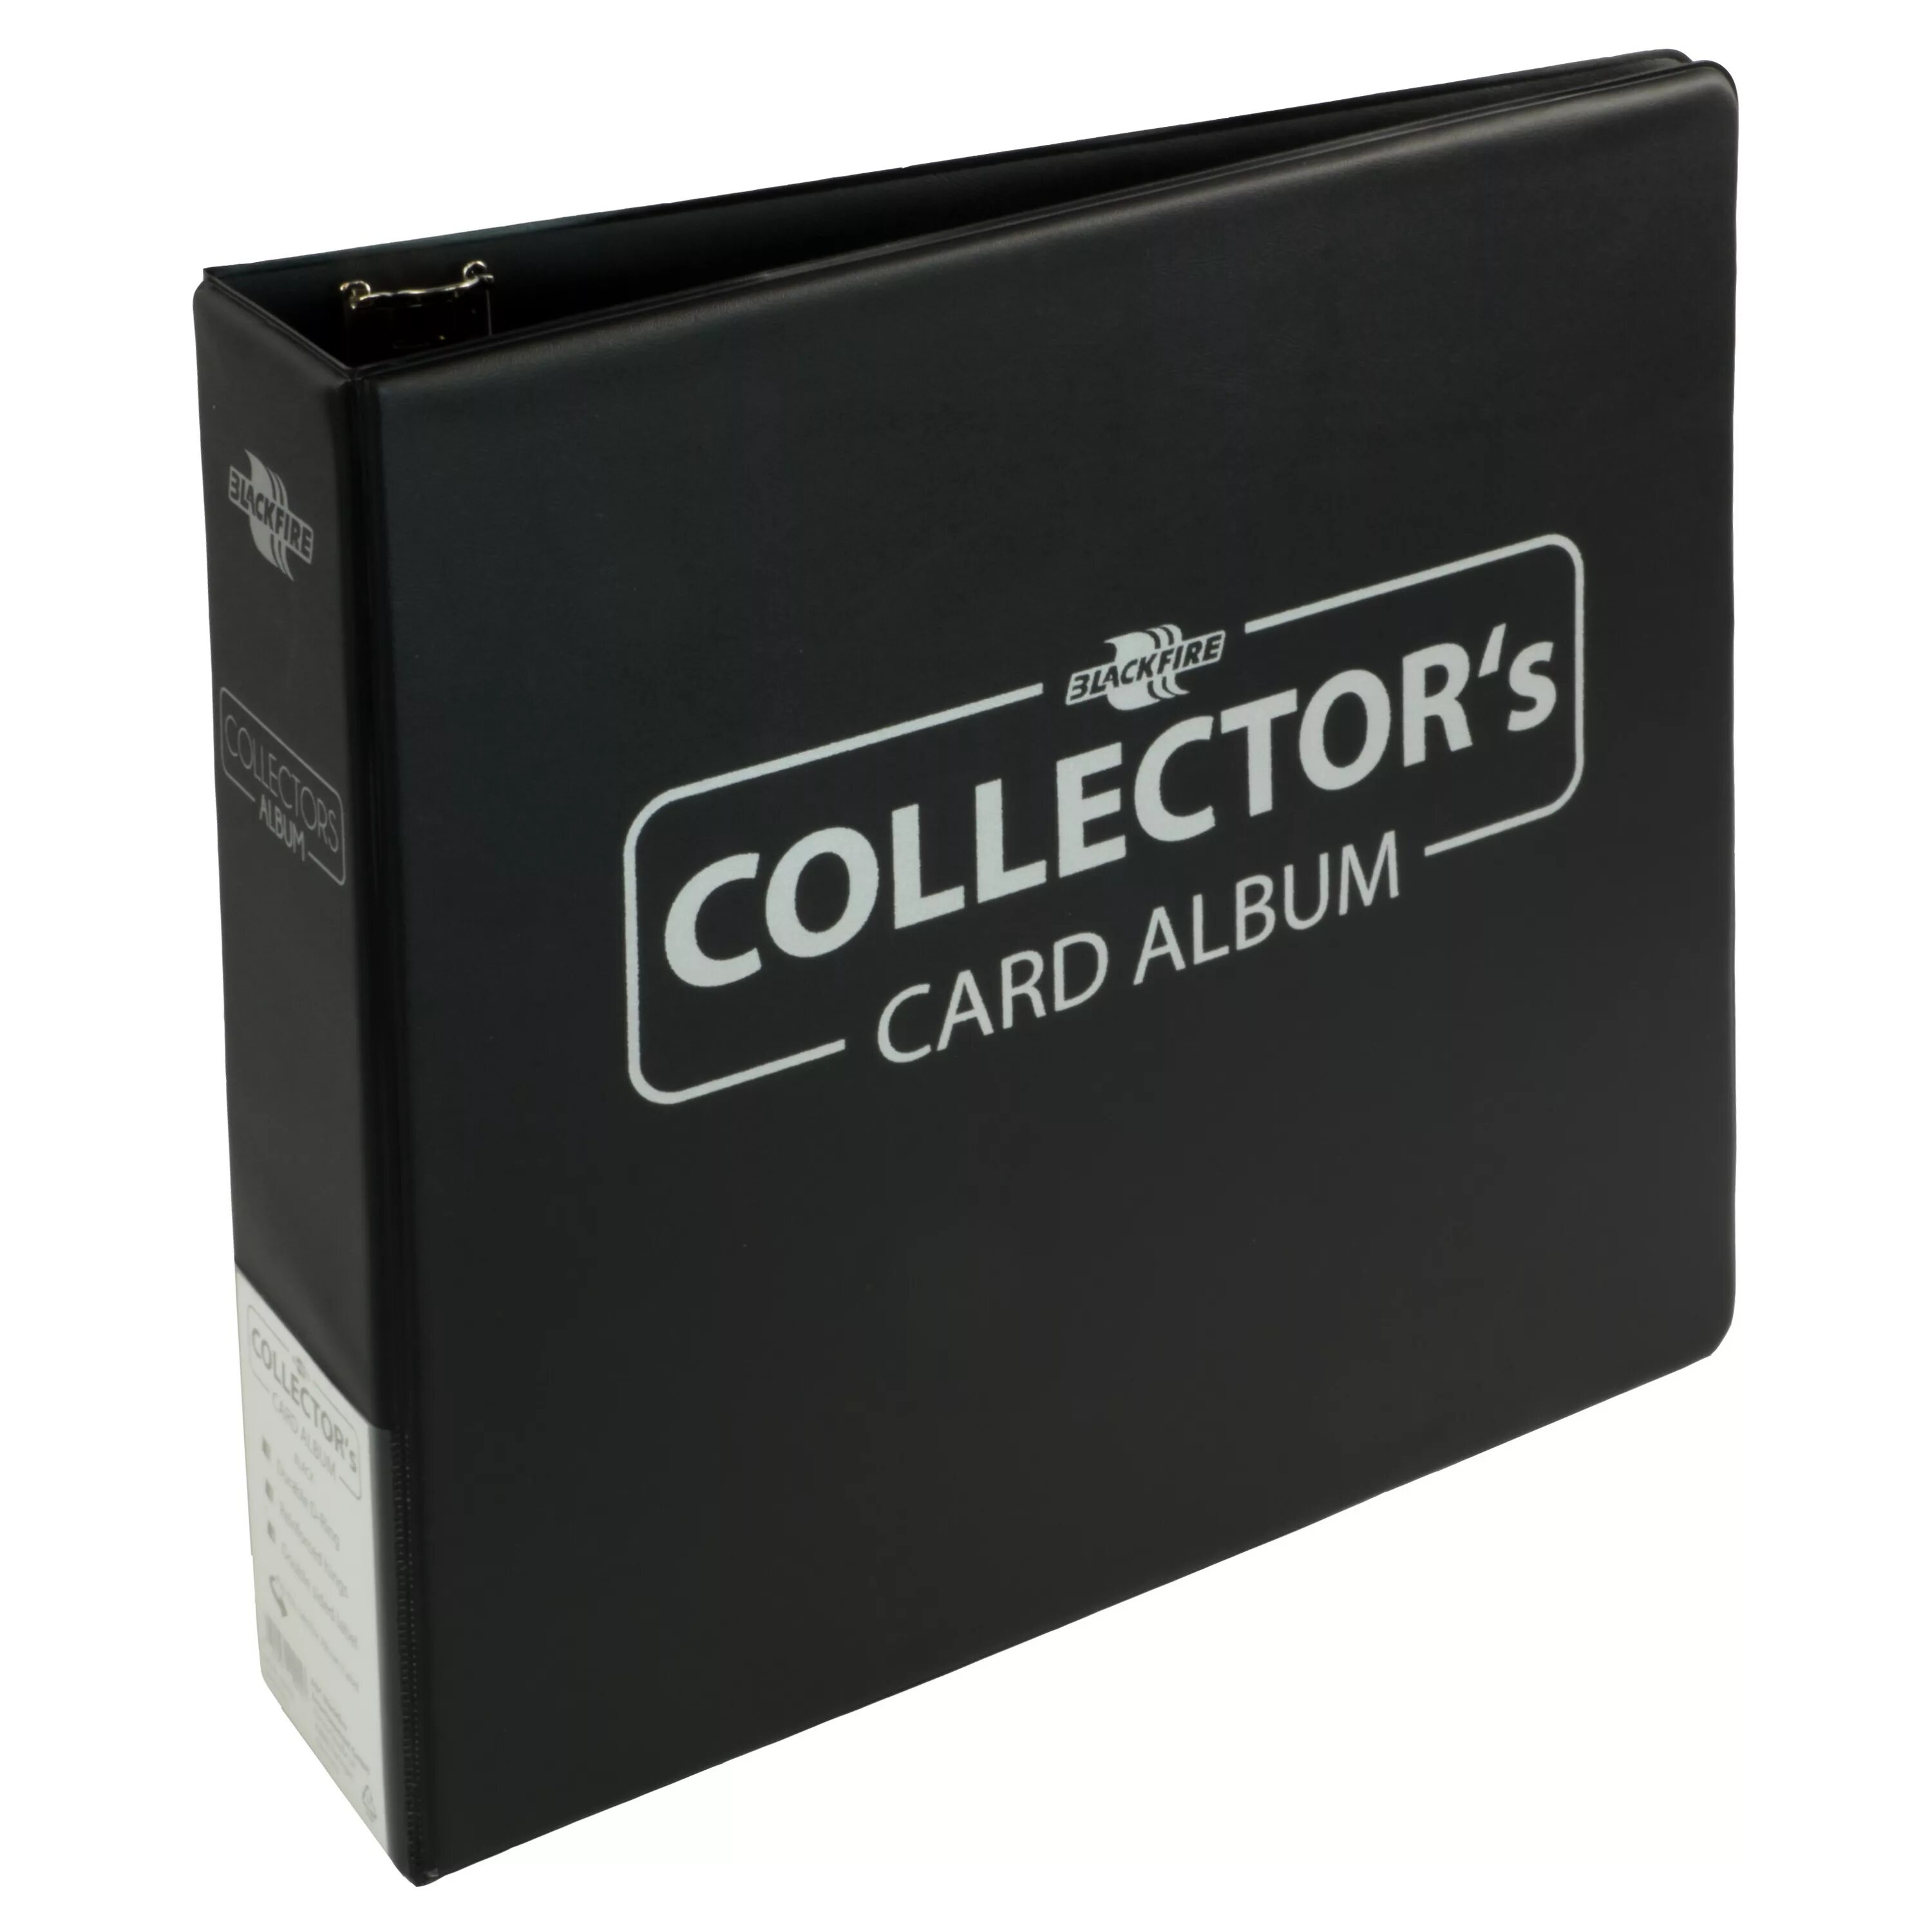 Card collect. Card Collector album. Сигаретные карточки Collectors Box. Collector Card Binder. Blackfire Collectors album - White.